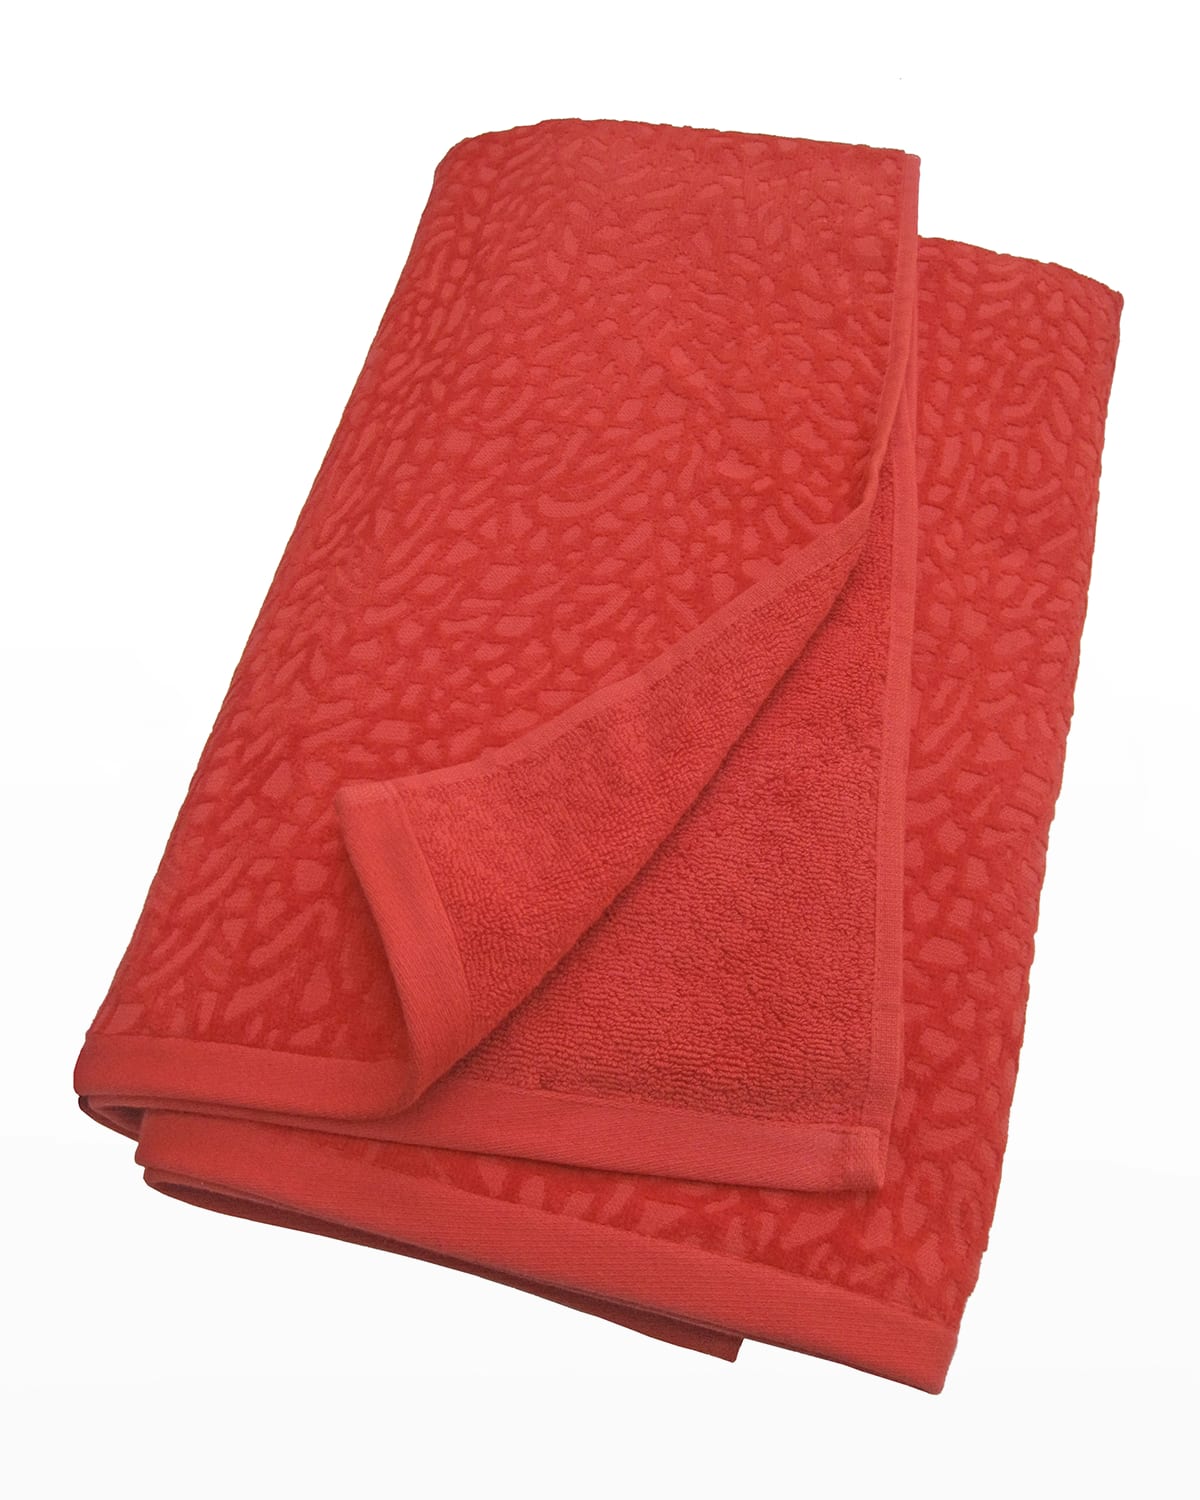 Affina Ventalina Beach Towel In Red